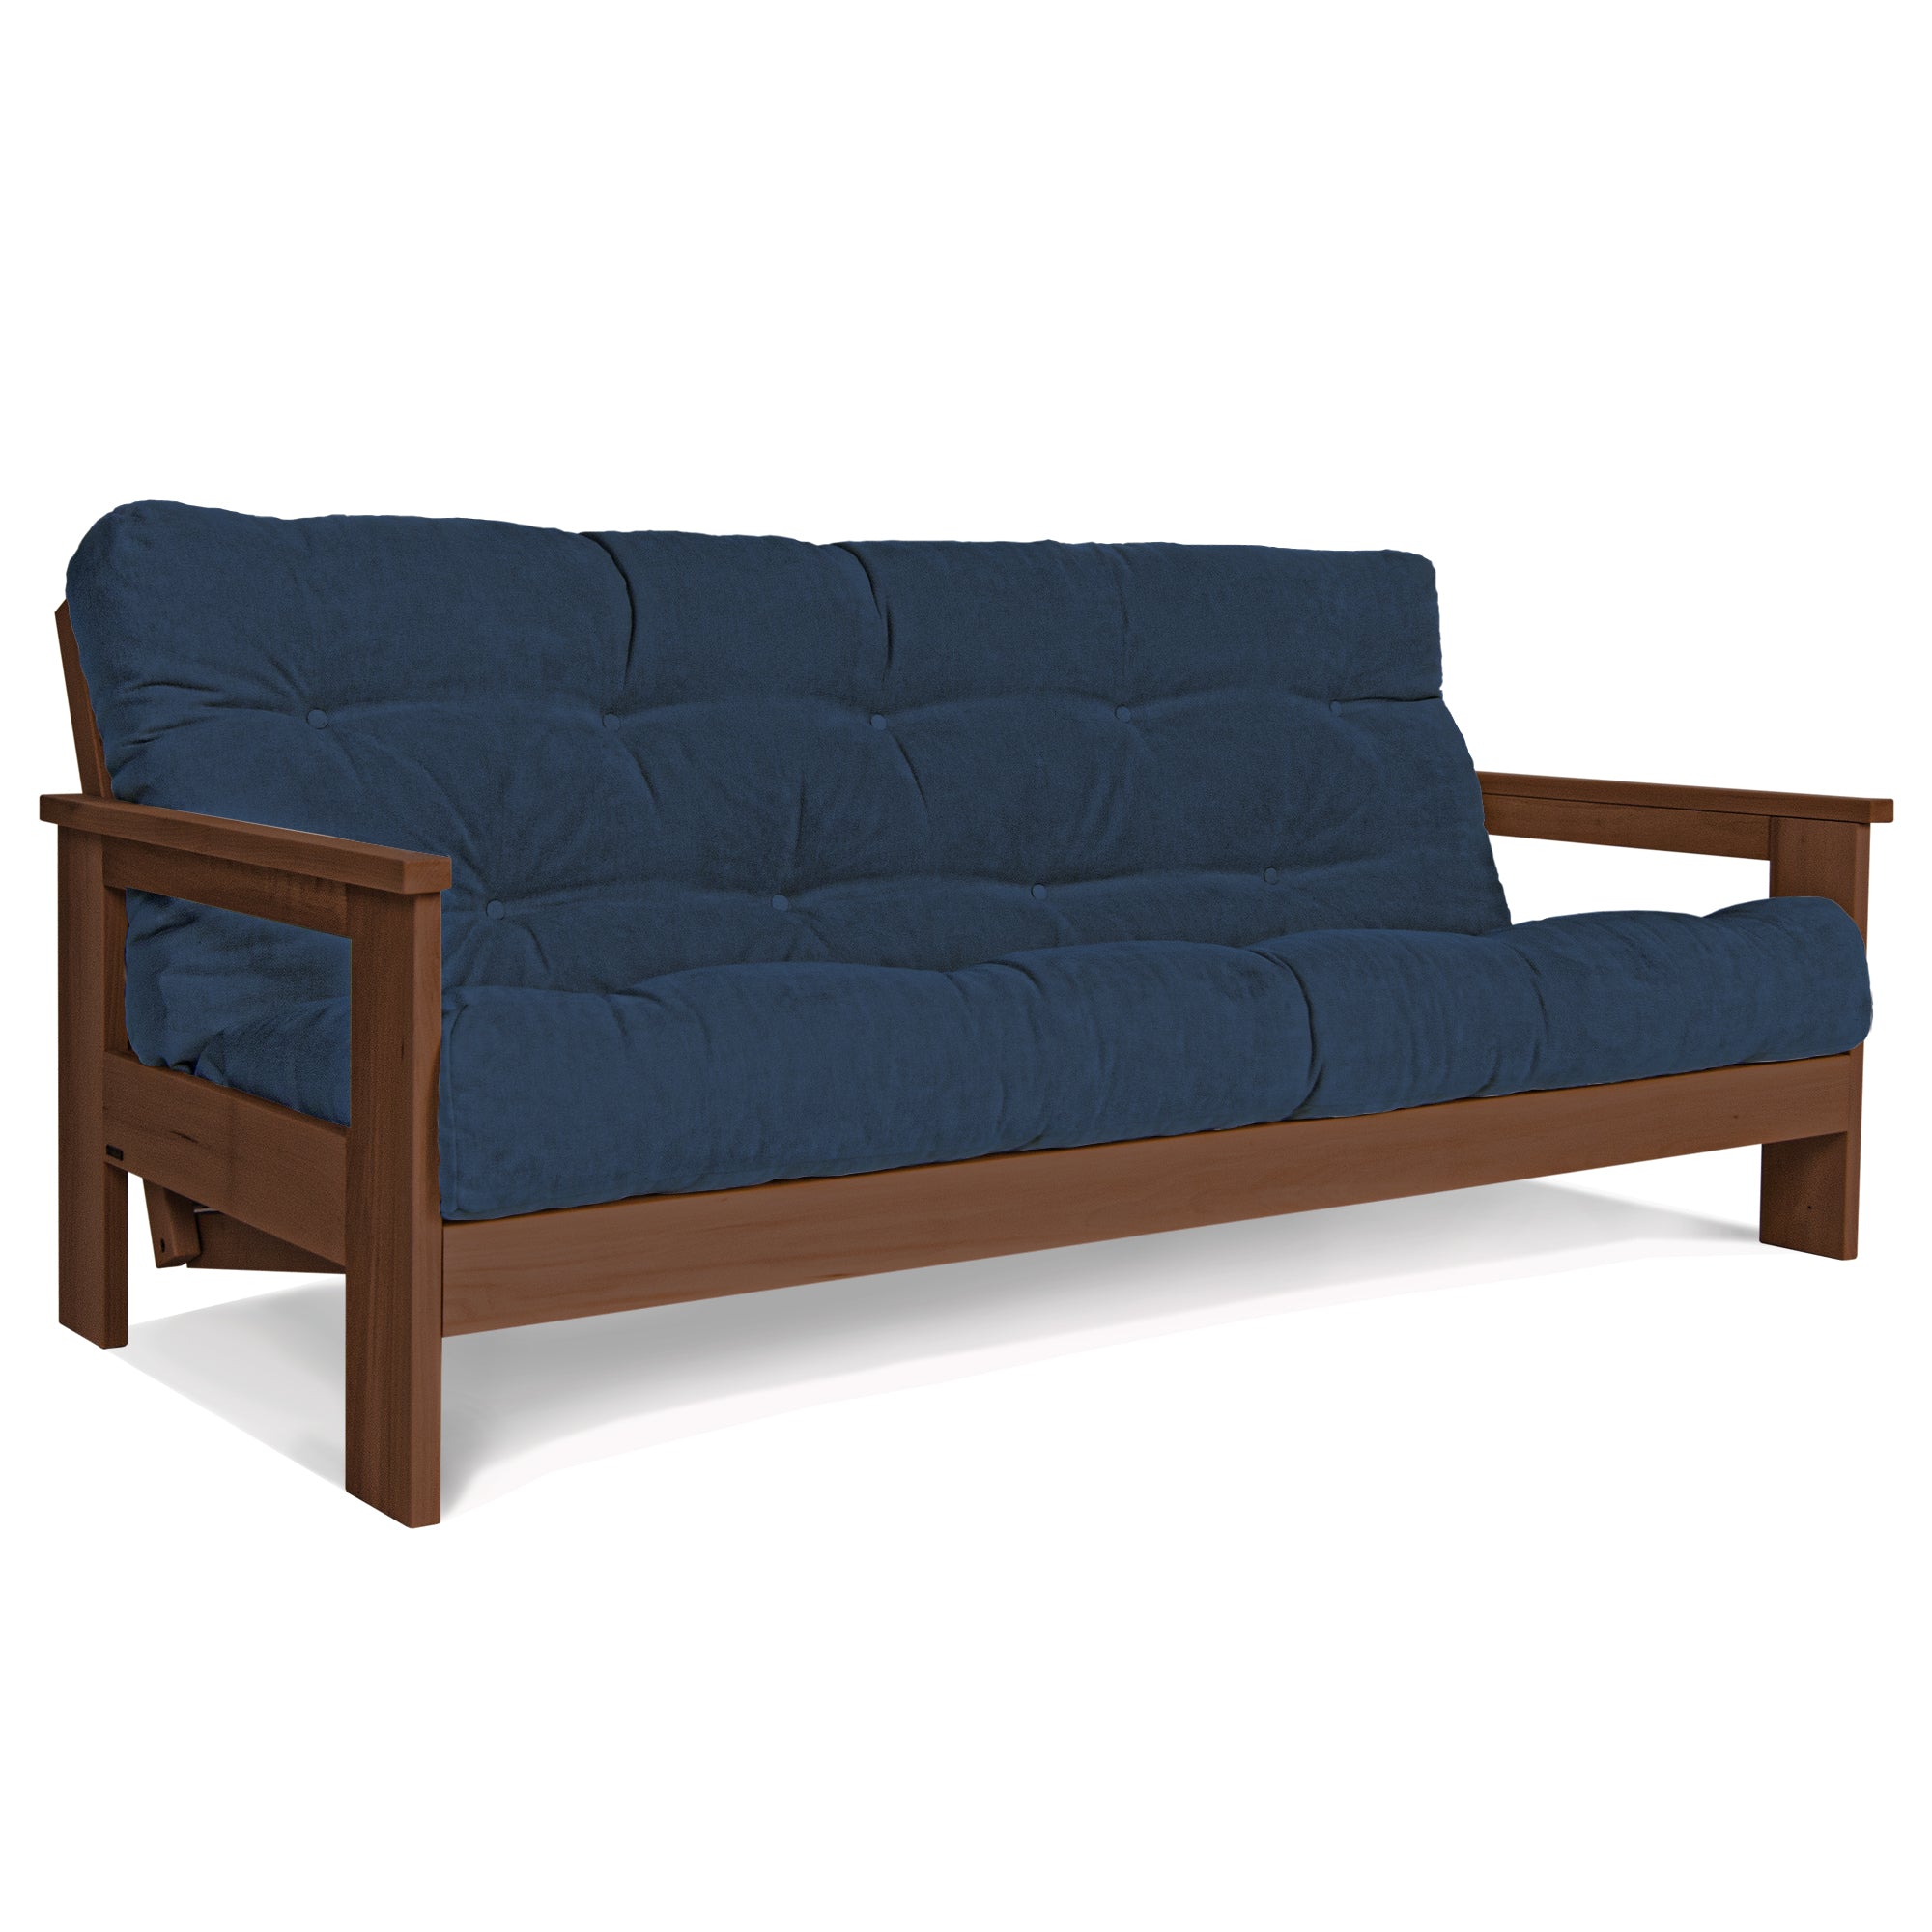 MEXICO Folding Sofa Bed-Beech Wood Frame-Walnut Colour-gray fabric colour-blue fabric colour